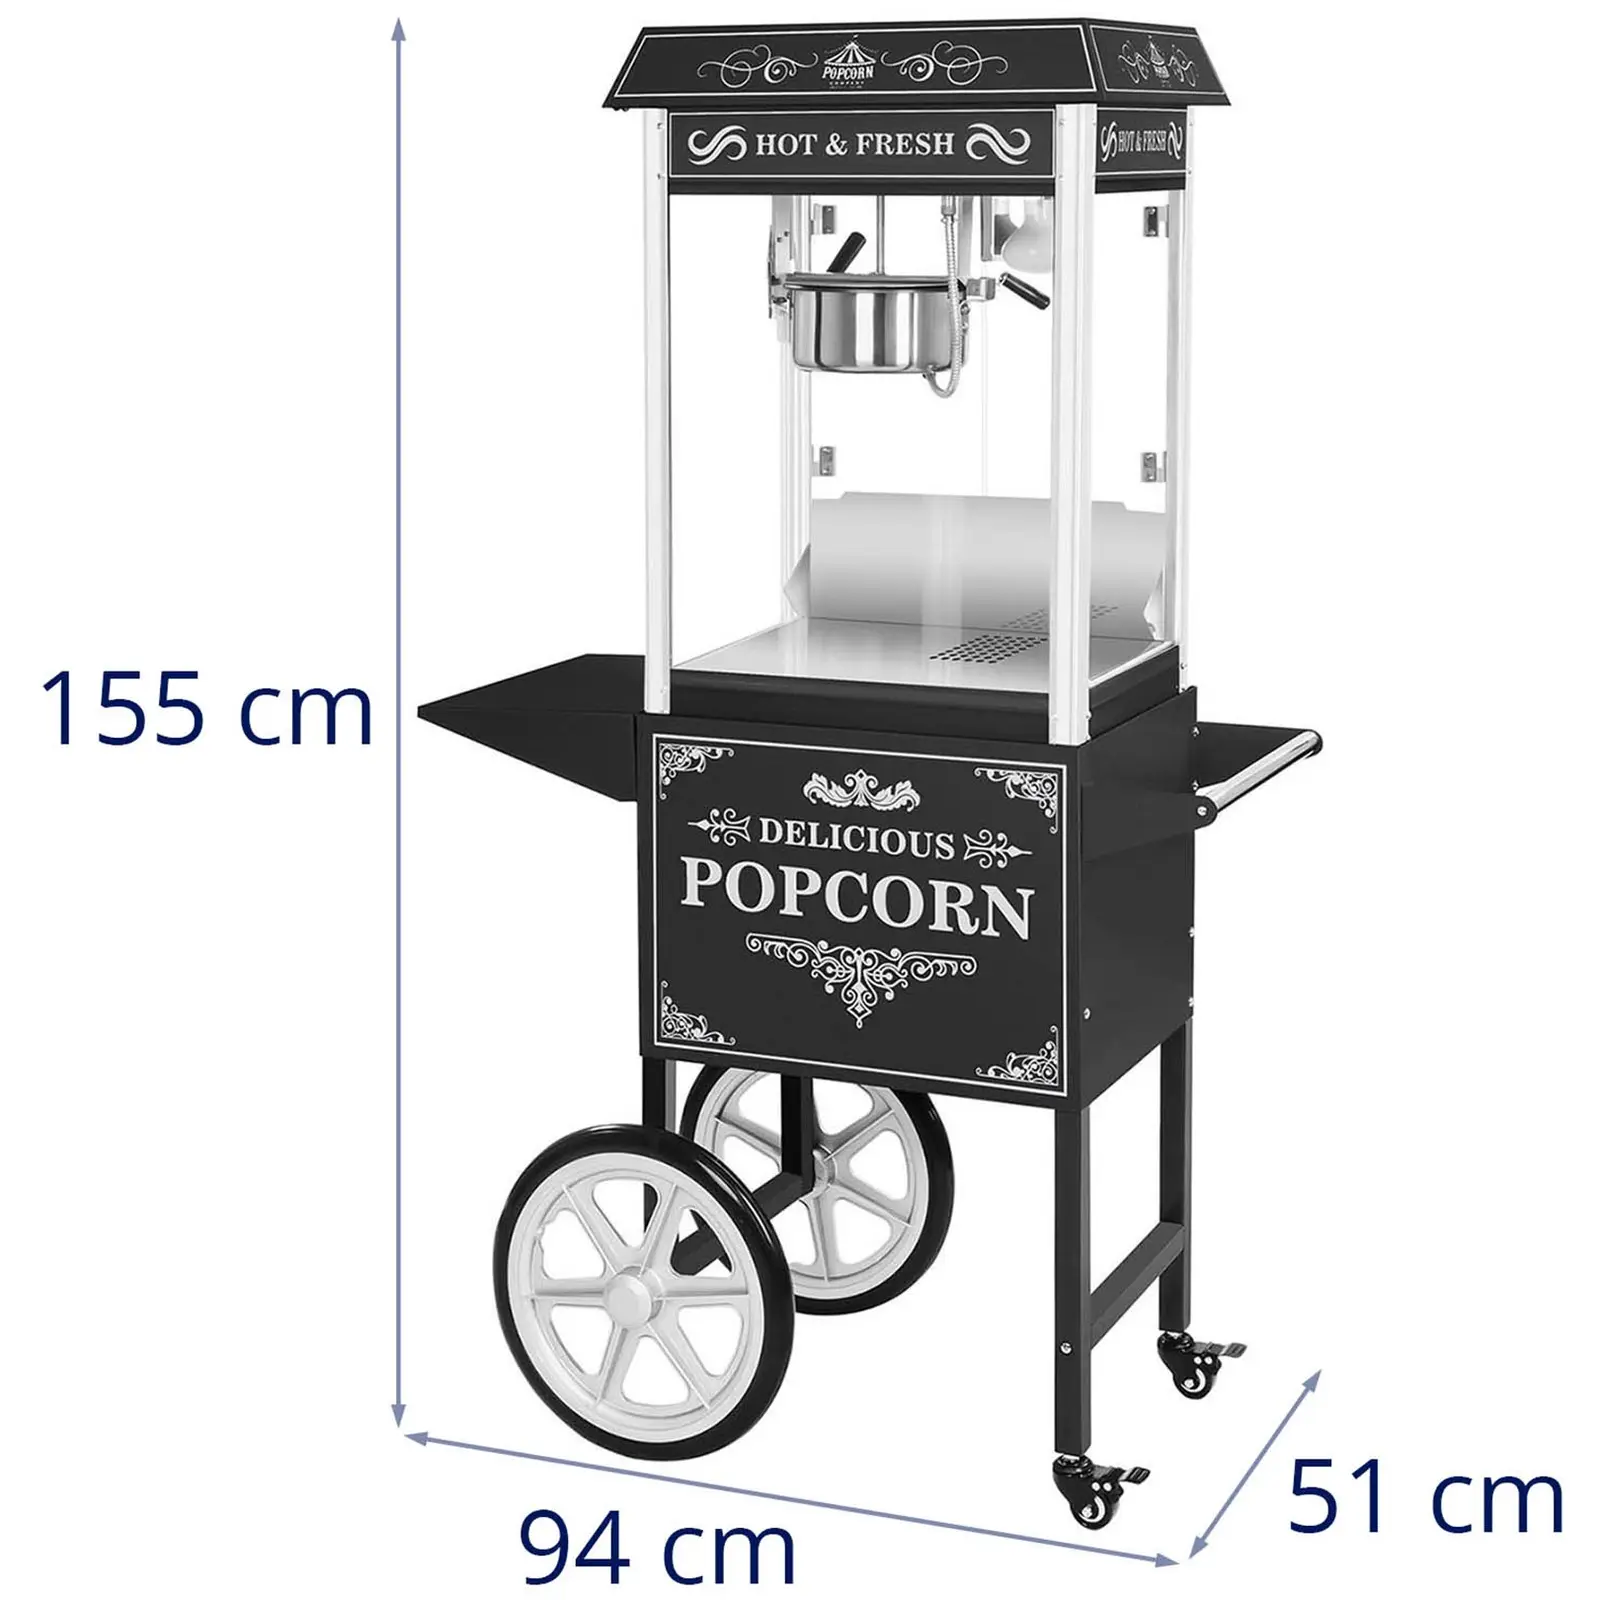 Popcorn Maker with trolley - black